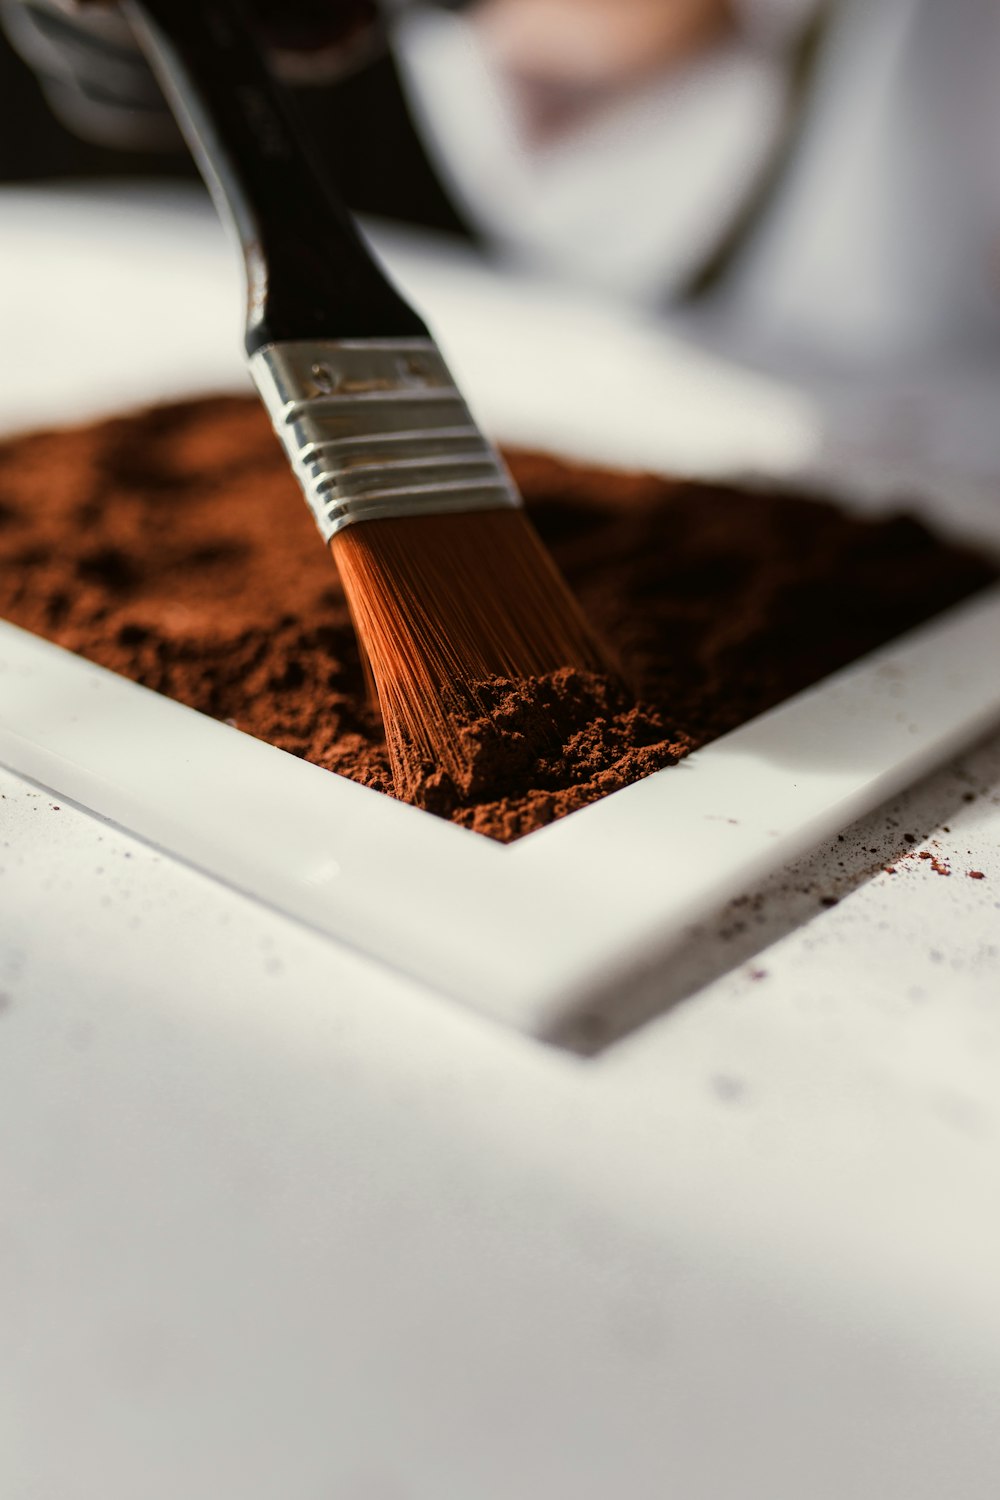 a spatula of cocoa powder and cocoa powder on a plate